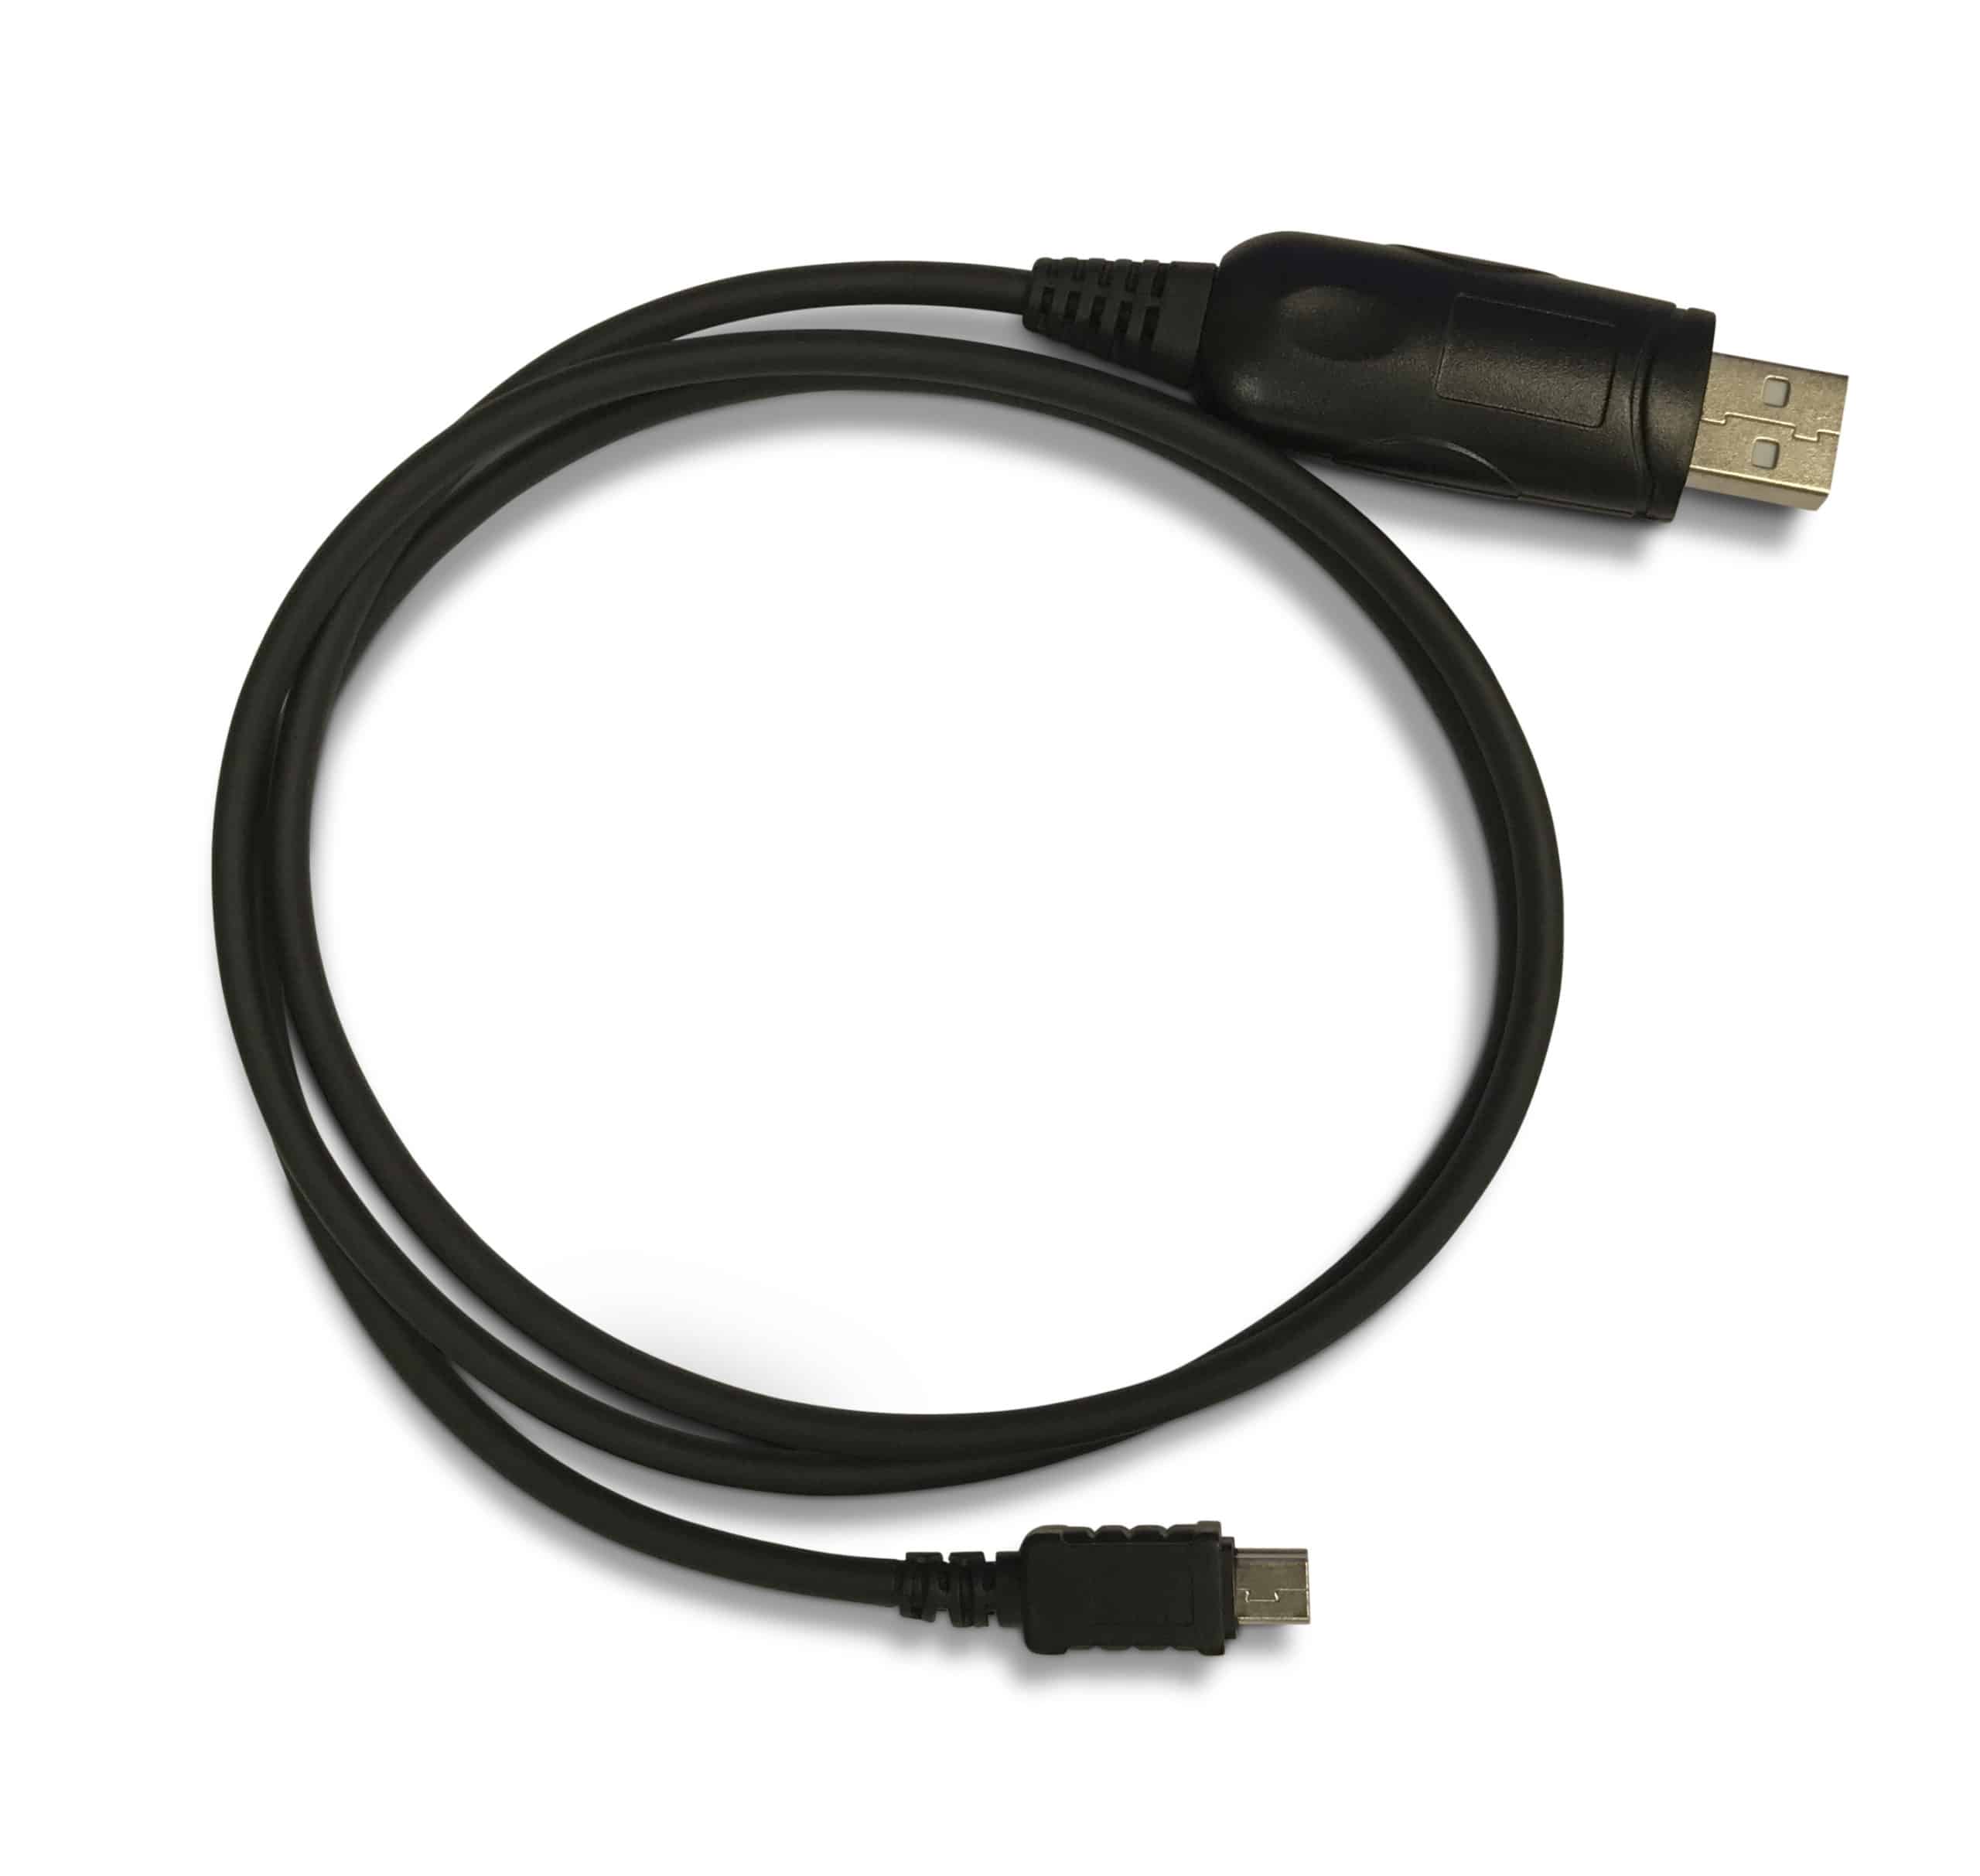 10 Meter Radio USB Cable for SR-655, SR-955  SR-447HPC2